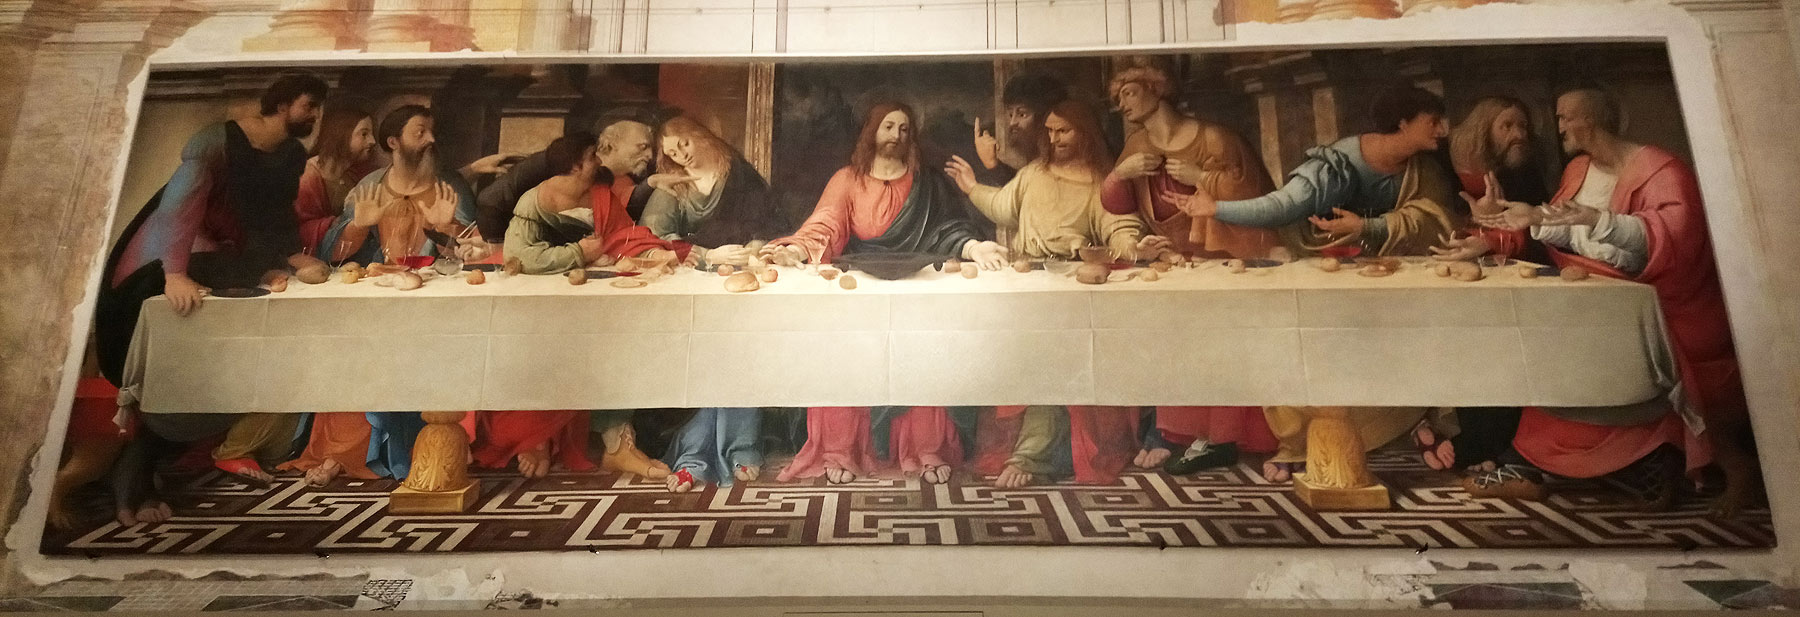 Girolamo Bonsignori, Ultima cena (1514 circa; olio su tela, 234 x 722 cm; Badia Polesine, Museo Civico) 